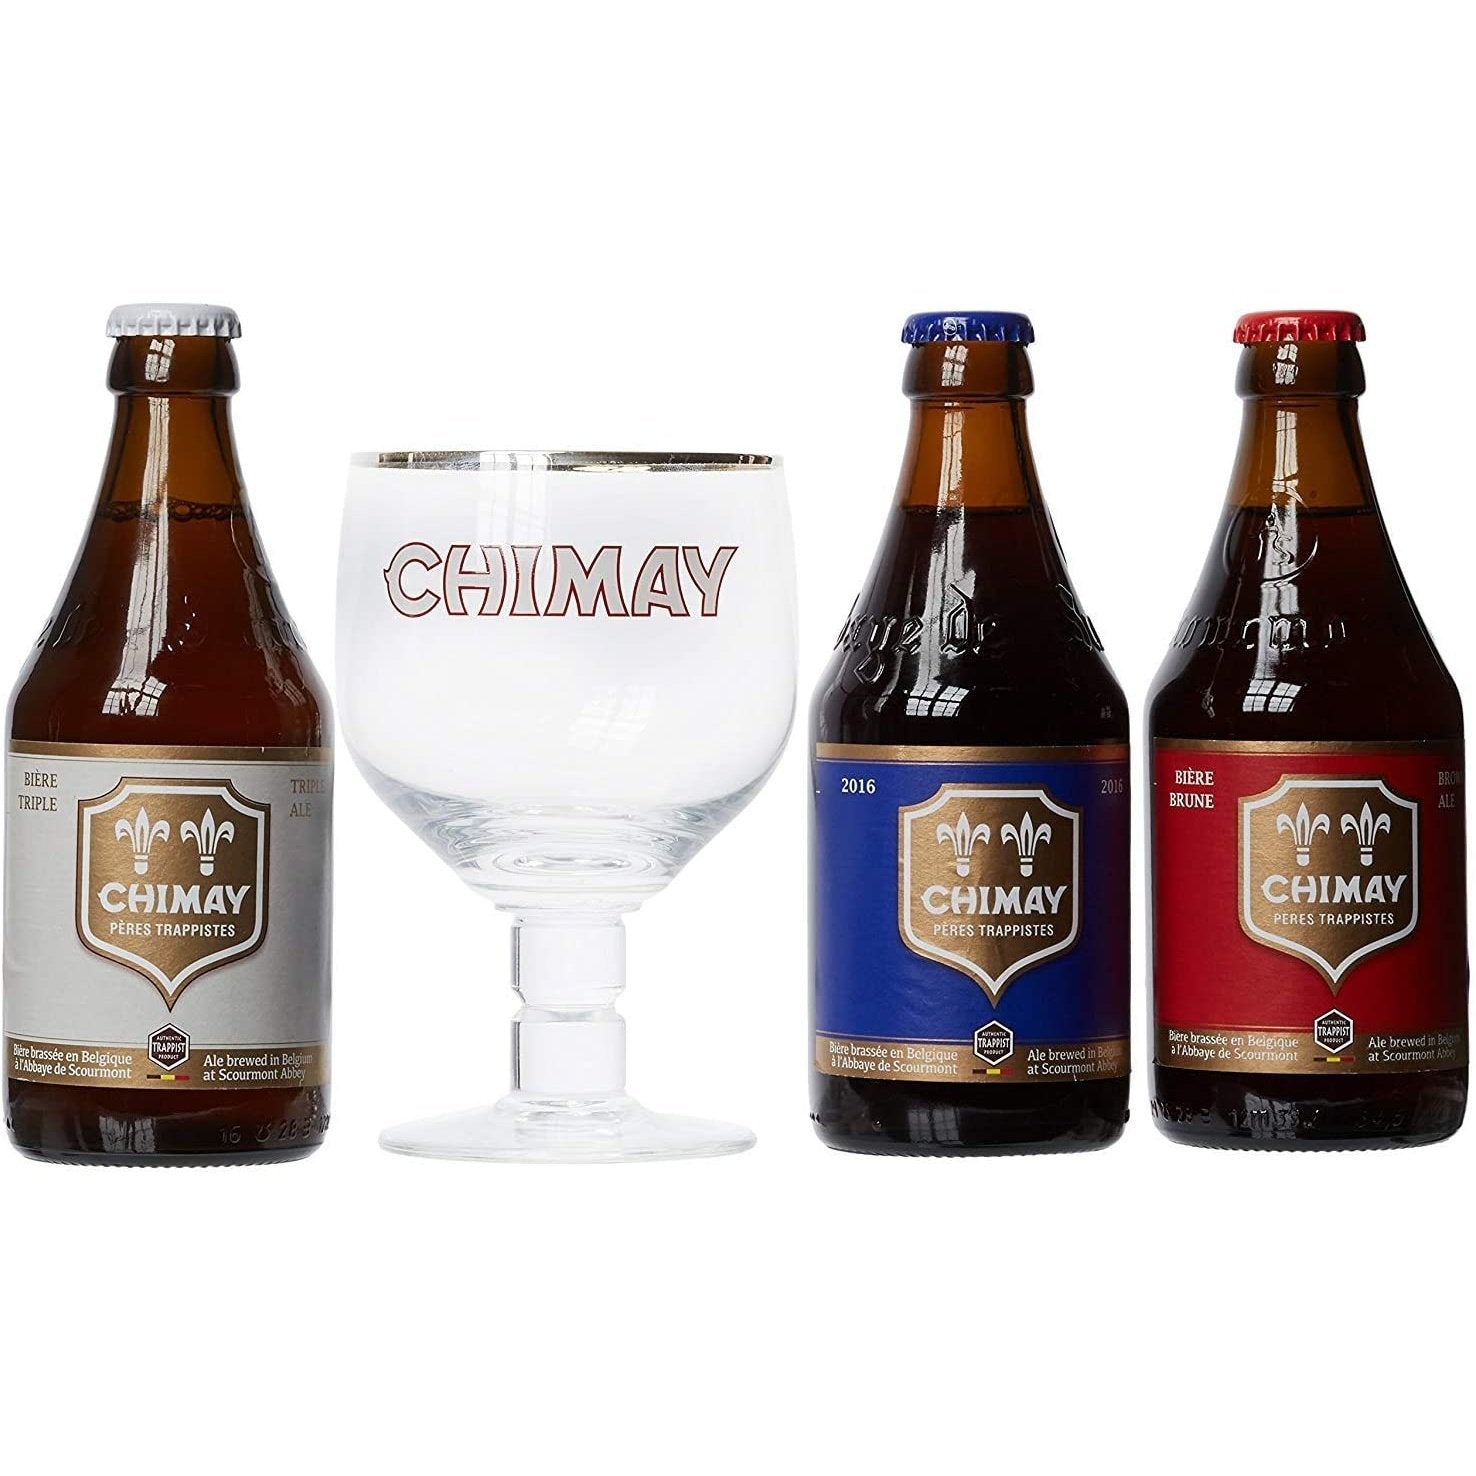 Chimay Belgischer Ale Kelch / Kelch Biergläser, 0,33 l, 2 Stück